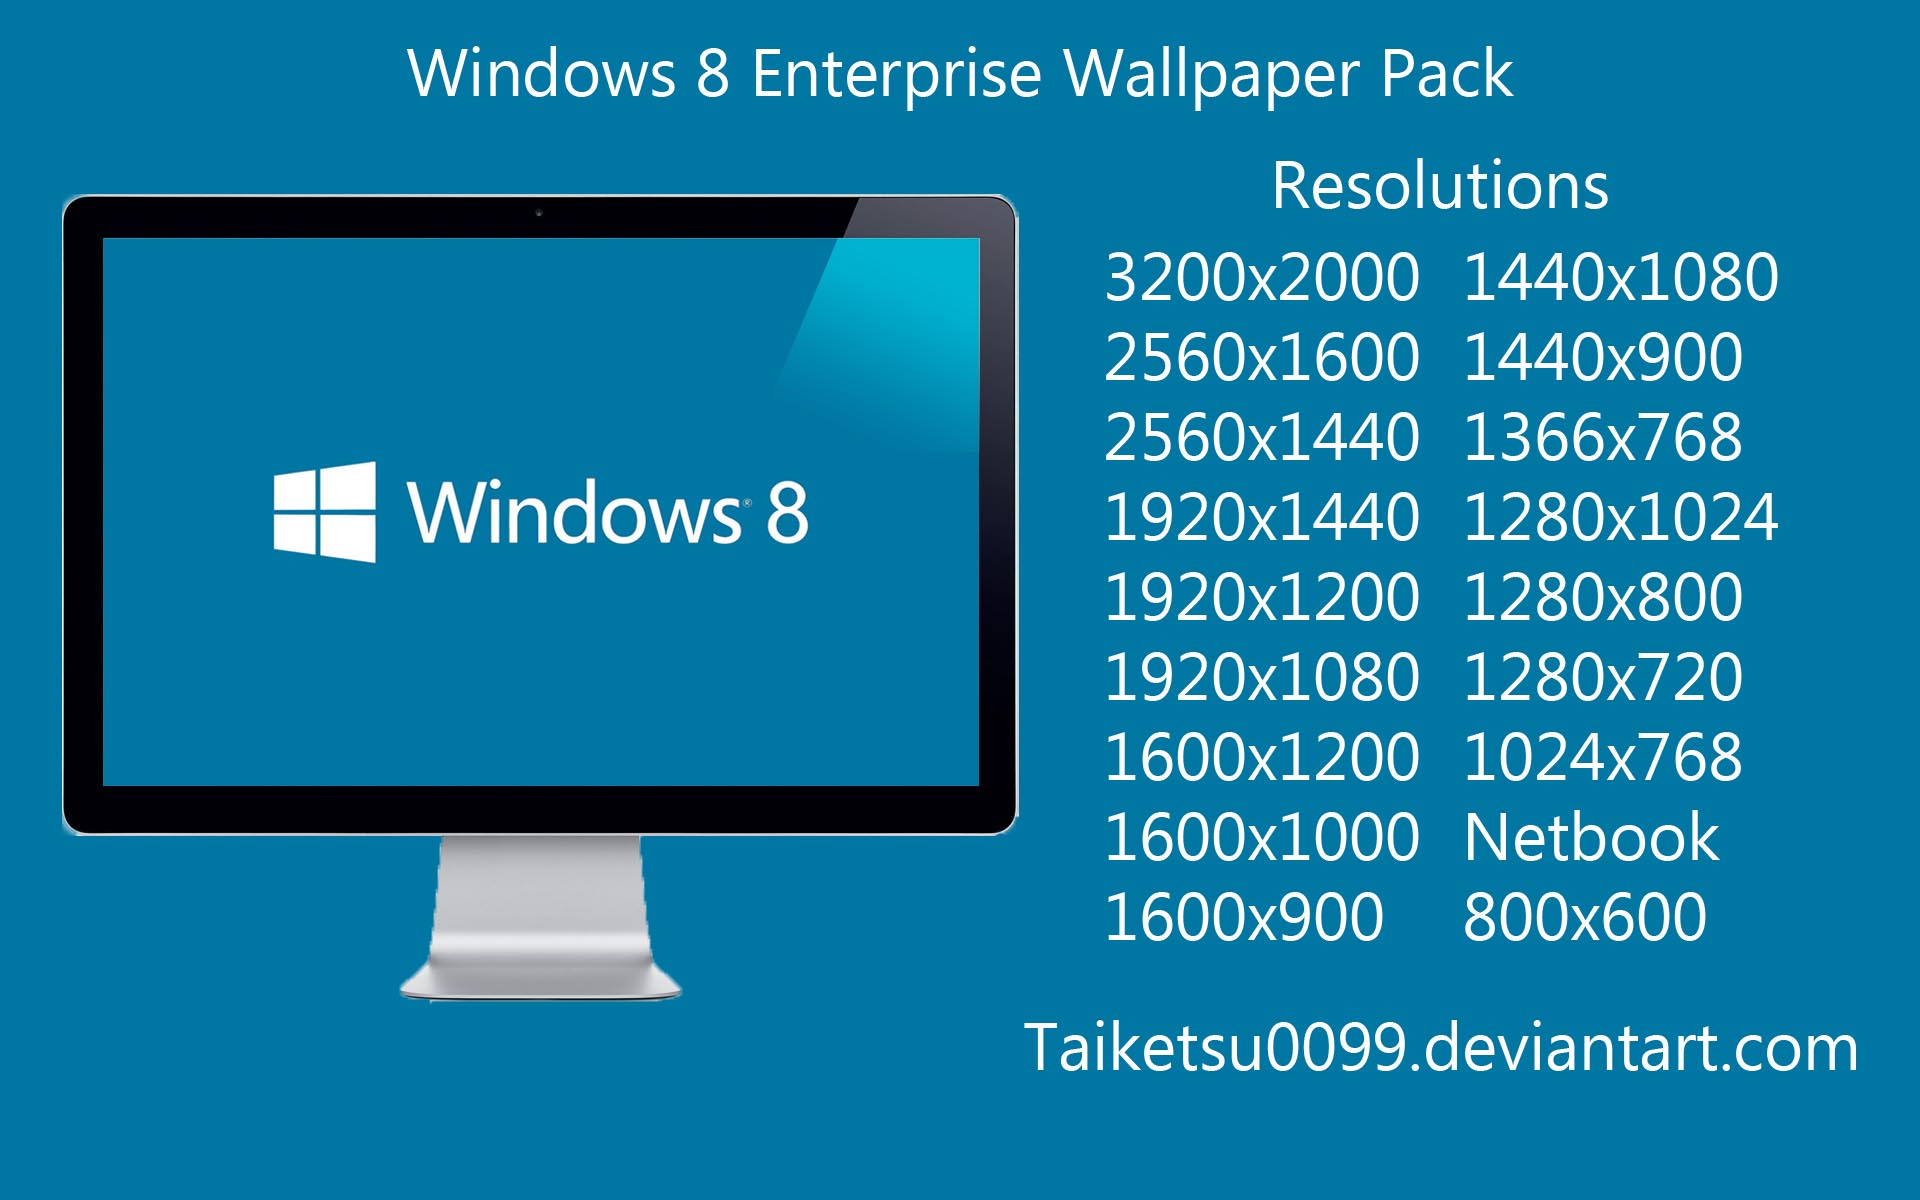 Free download Windows 8 Enterprise Wallpaper Pack by Taiketsu0099 on